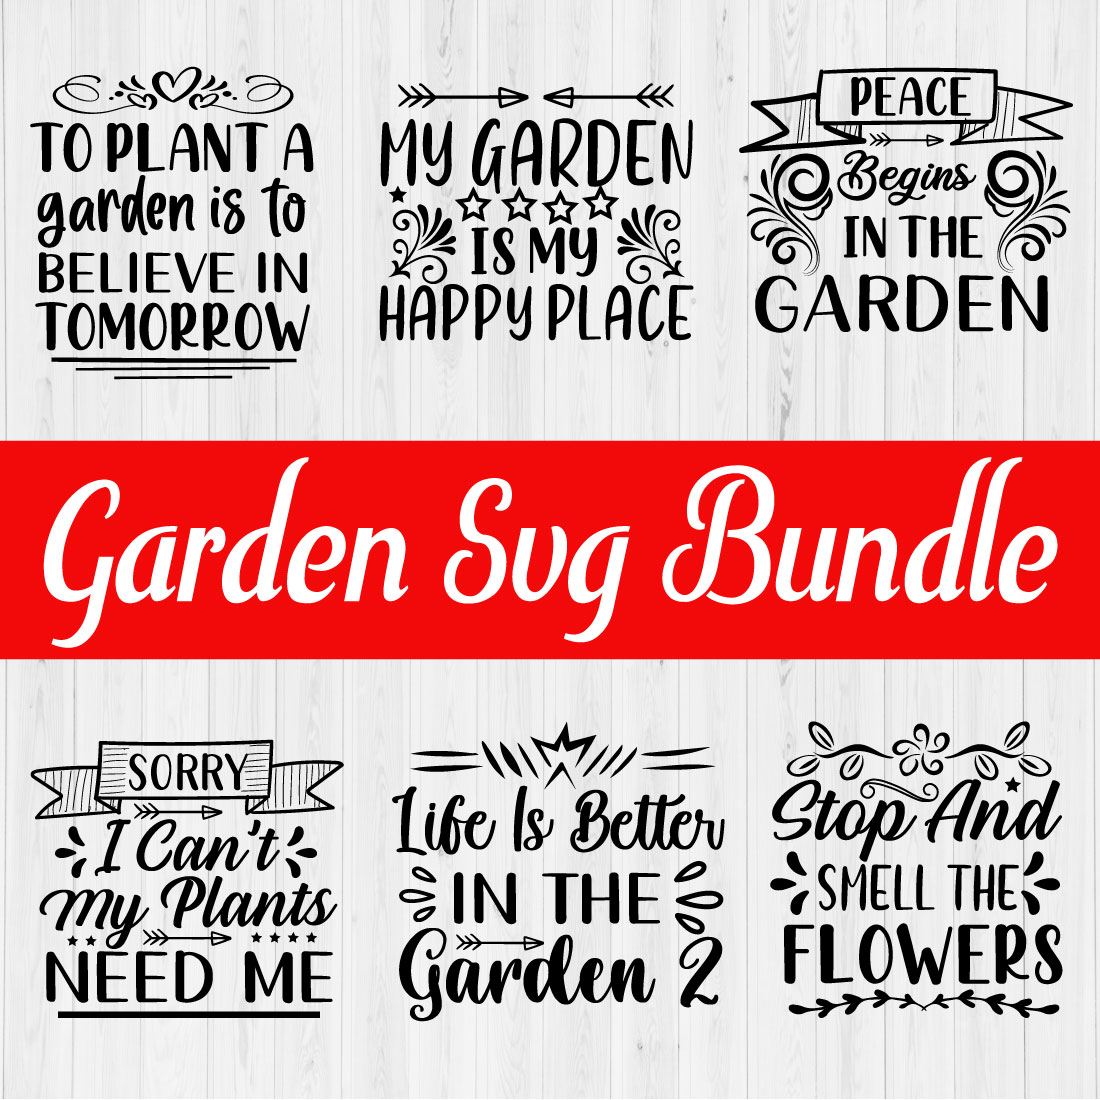 Garden Svg Typography Design Bundle Vol5 cover image.